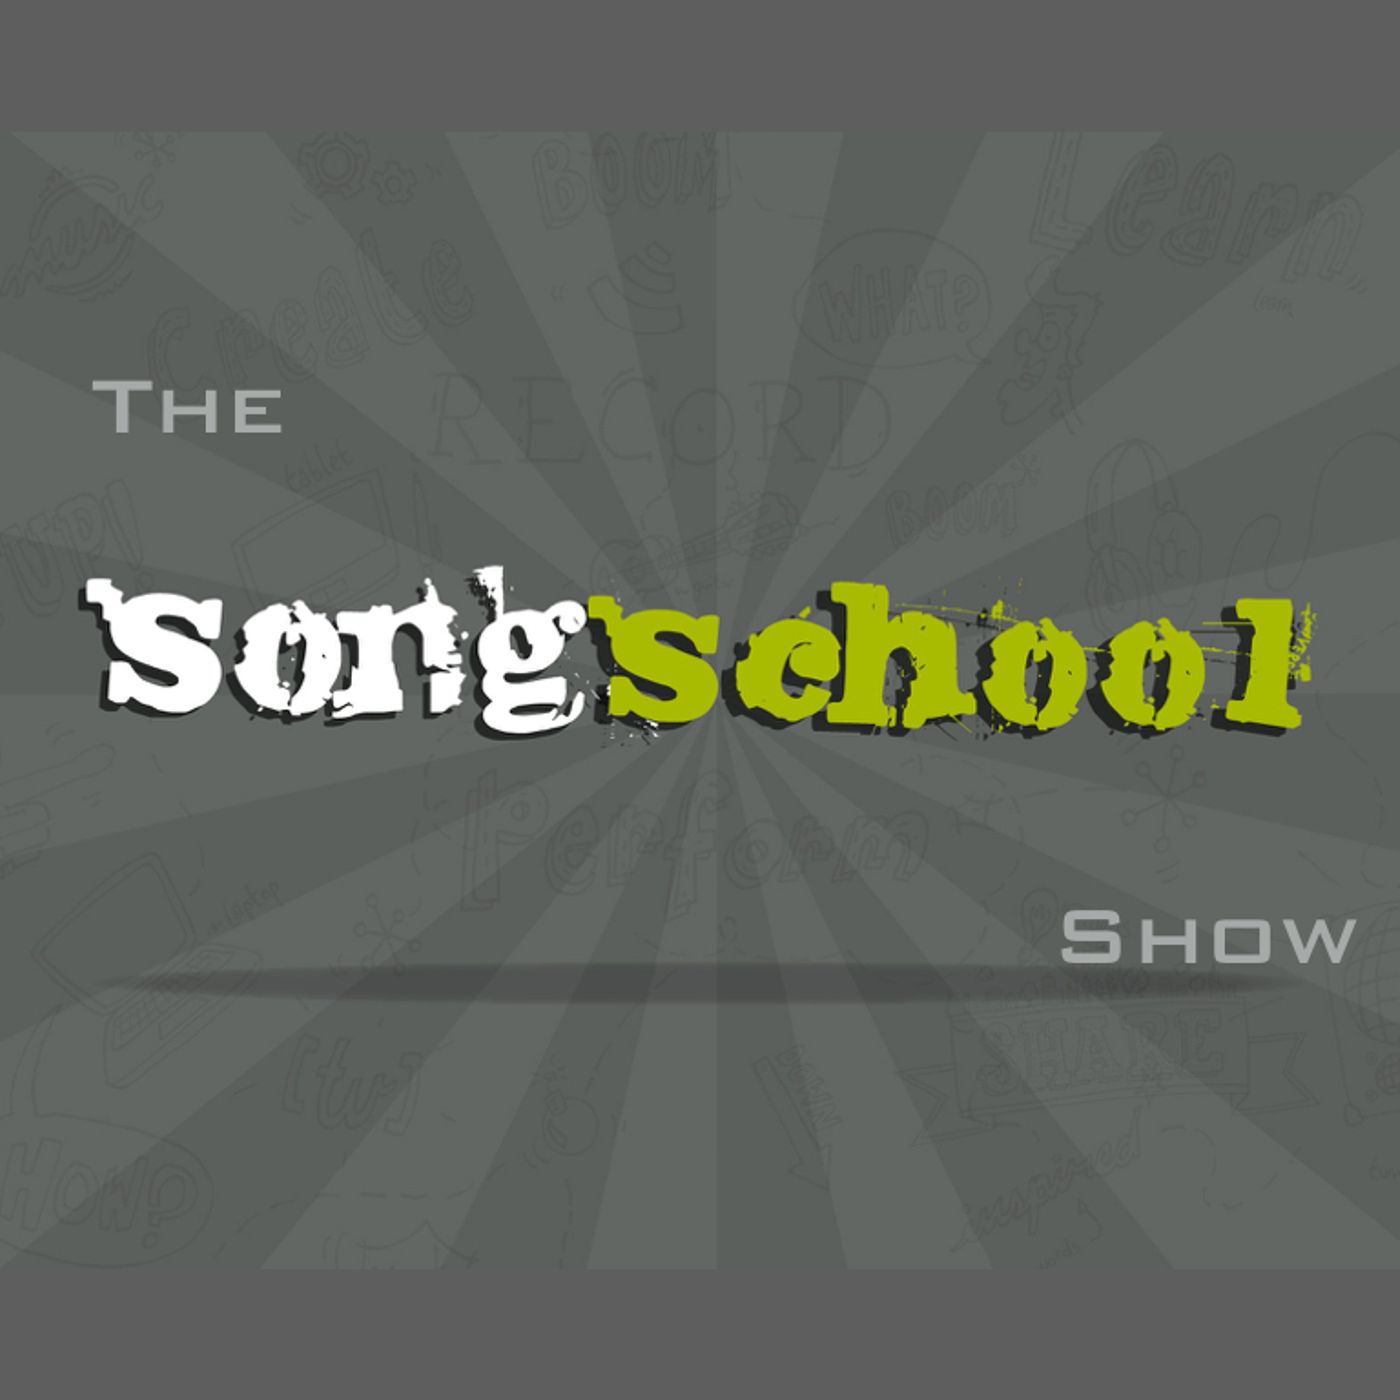 The Songschool Show @ CBS Wexford pt 2